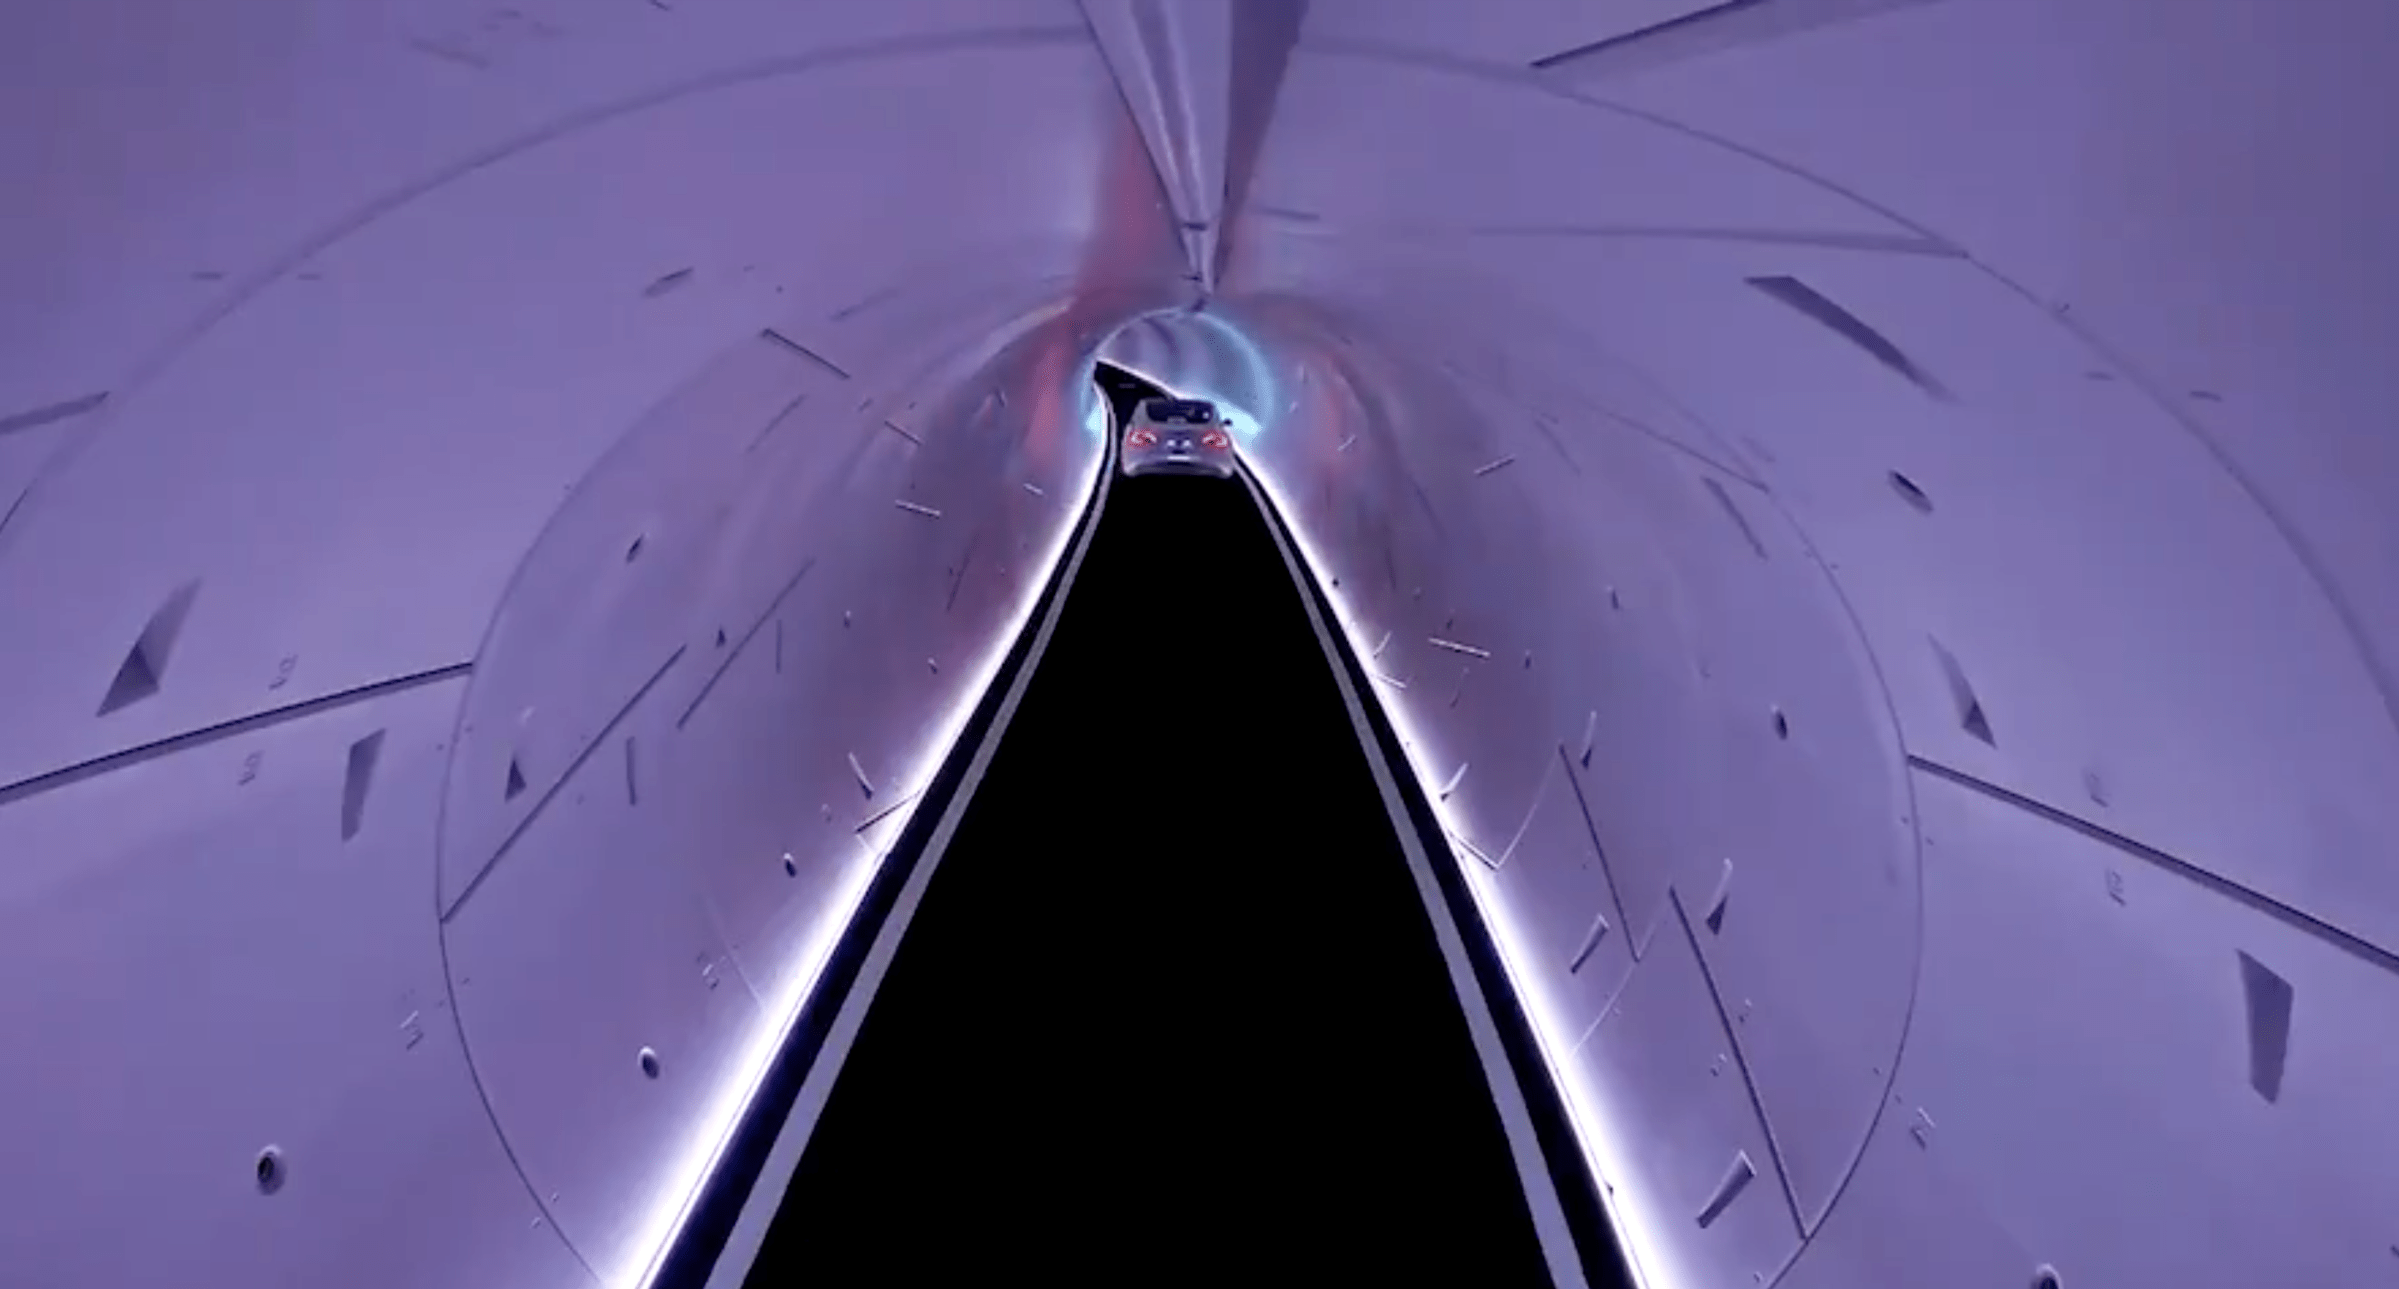 A single Tesla sedan drives through a tunnel